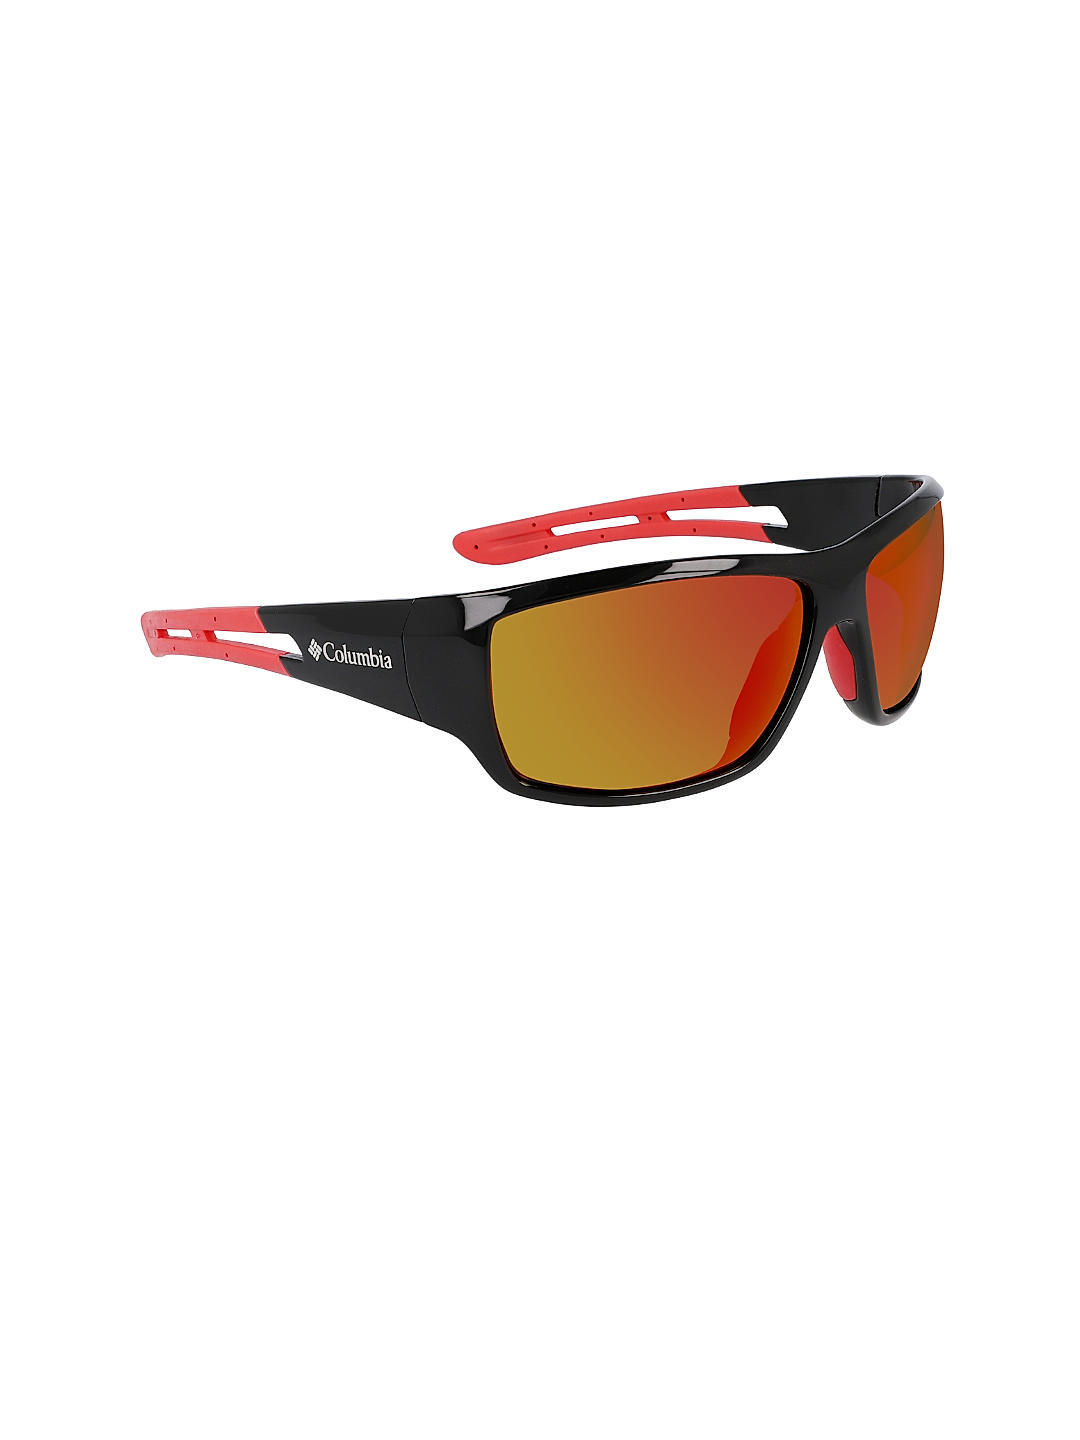 Buy Black Utilizer Sunglasses for Men Online at Columbia Sportswear